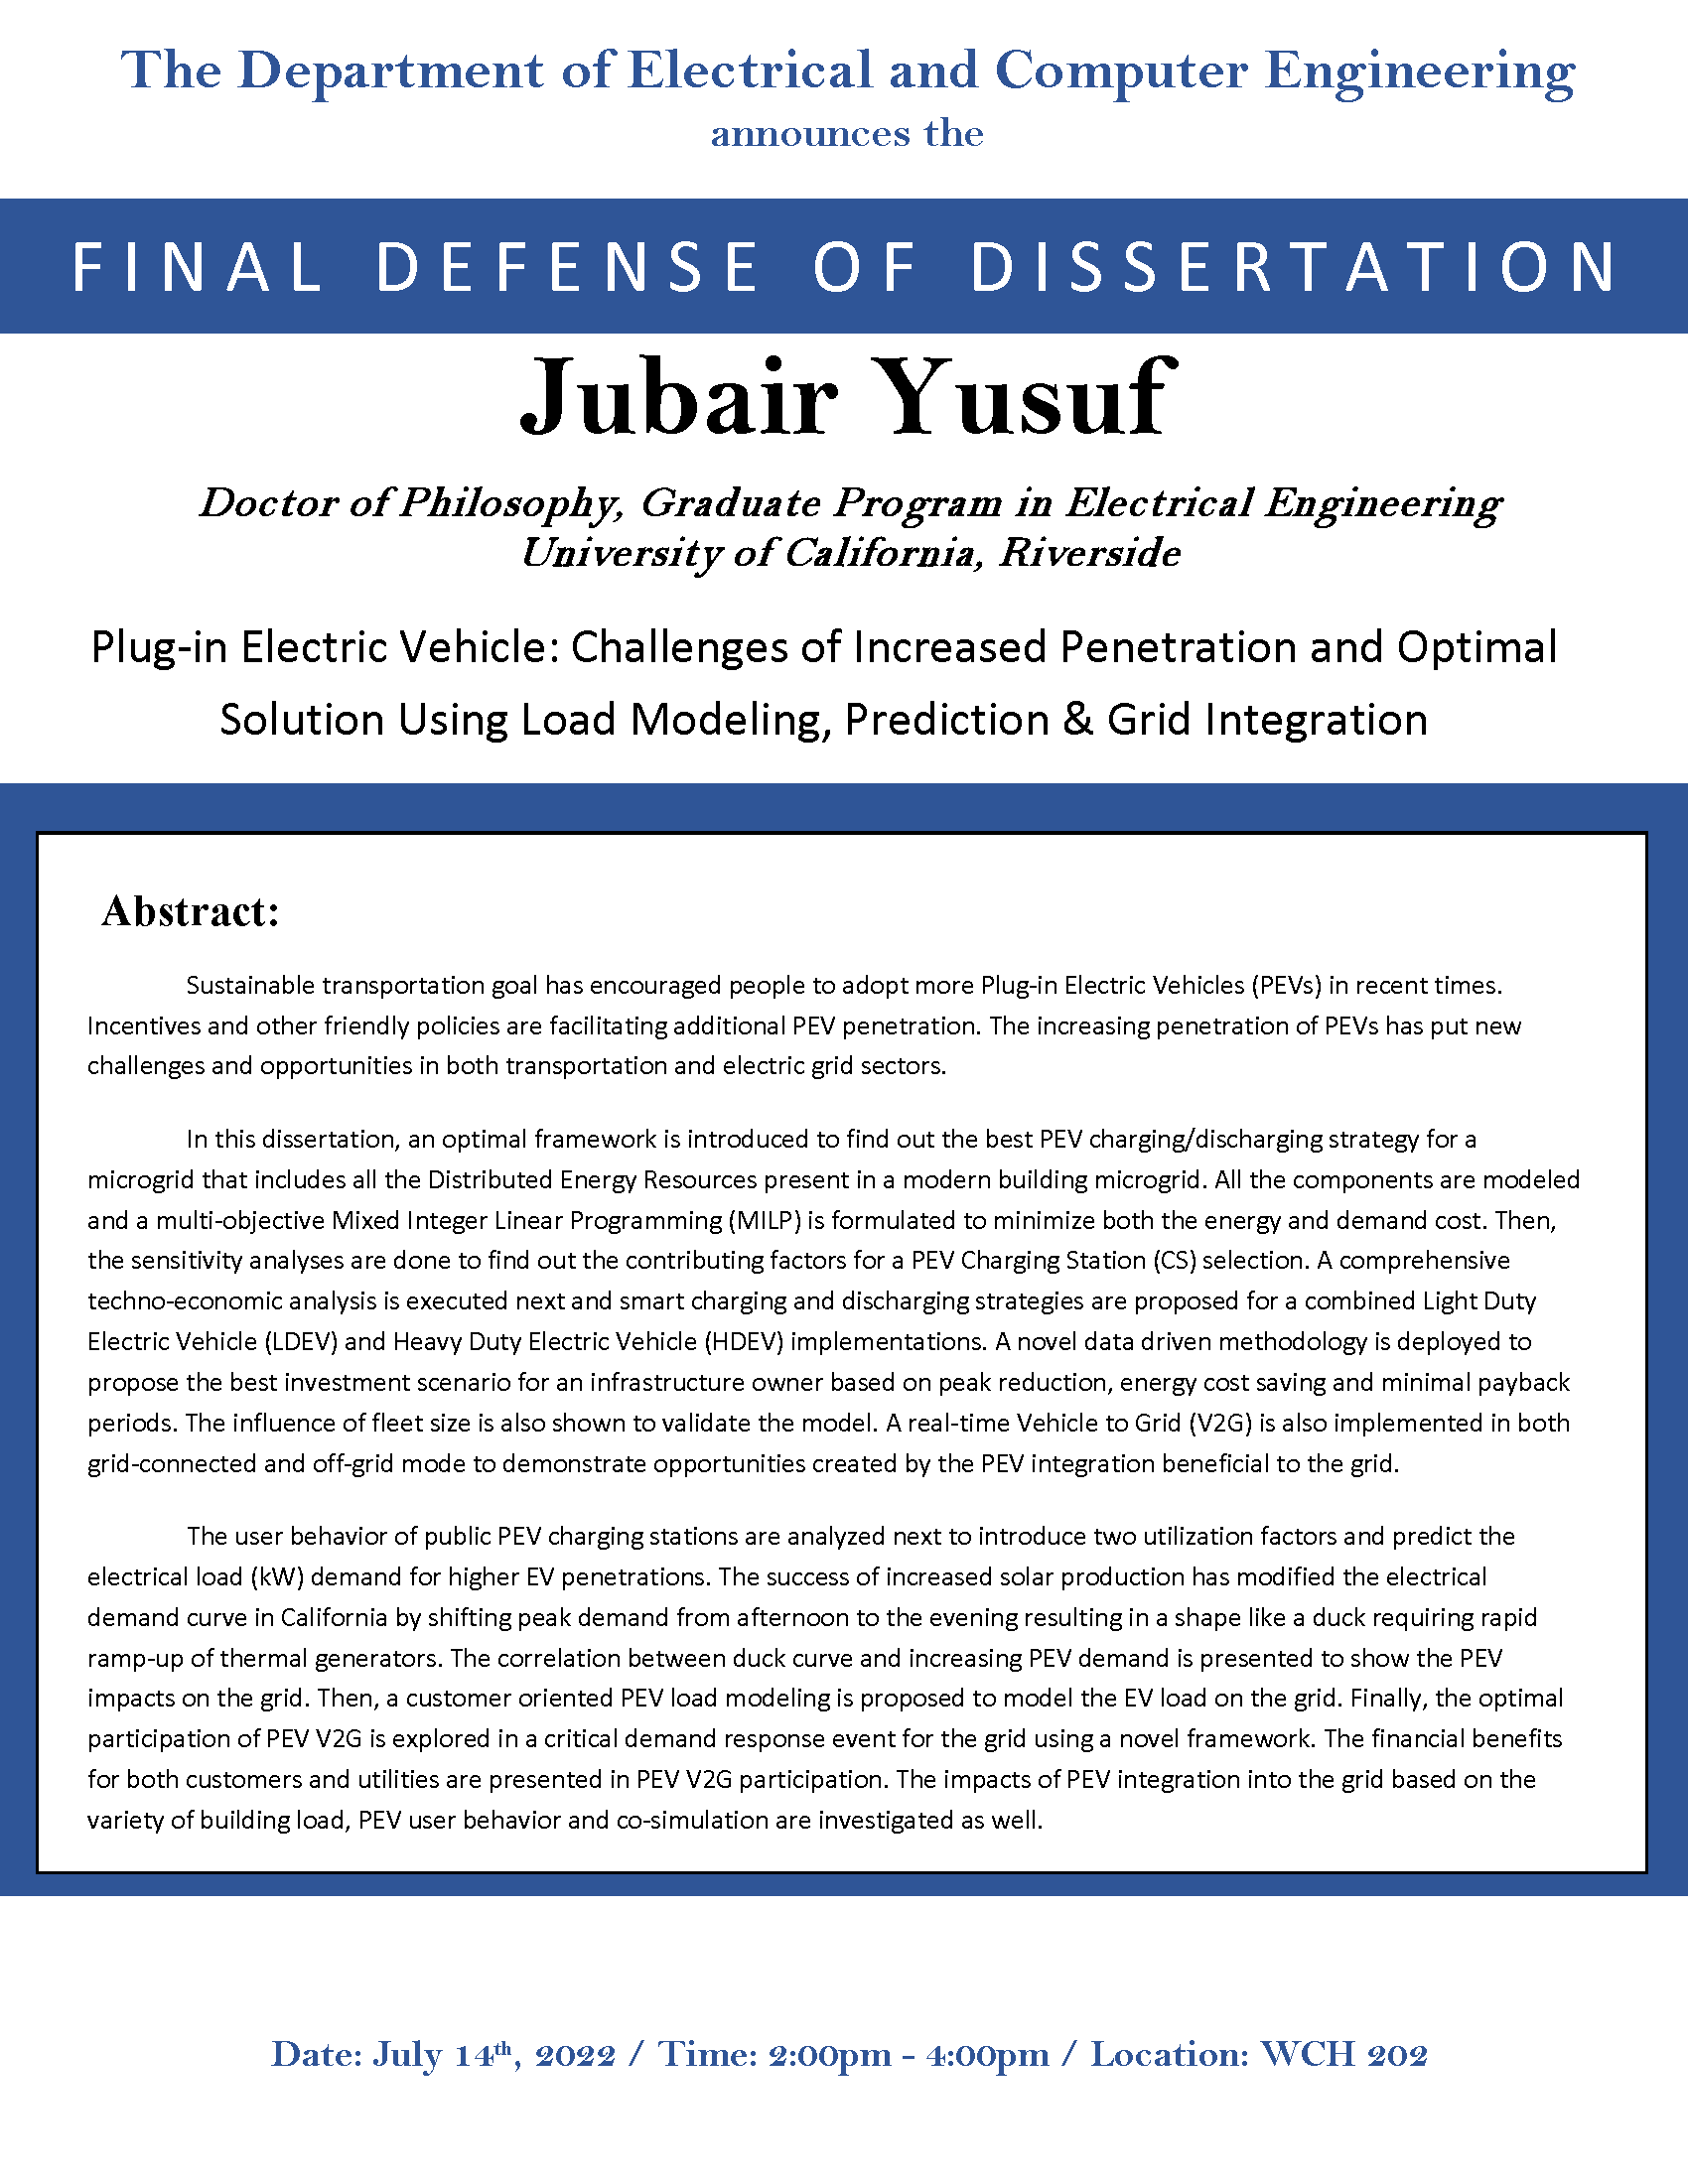 Jubair Yusuf